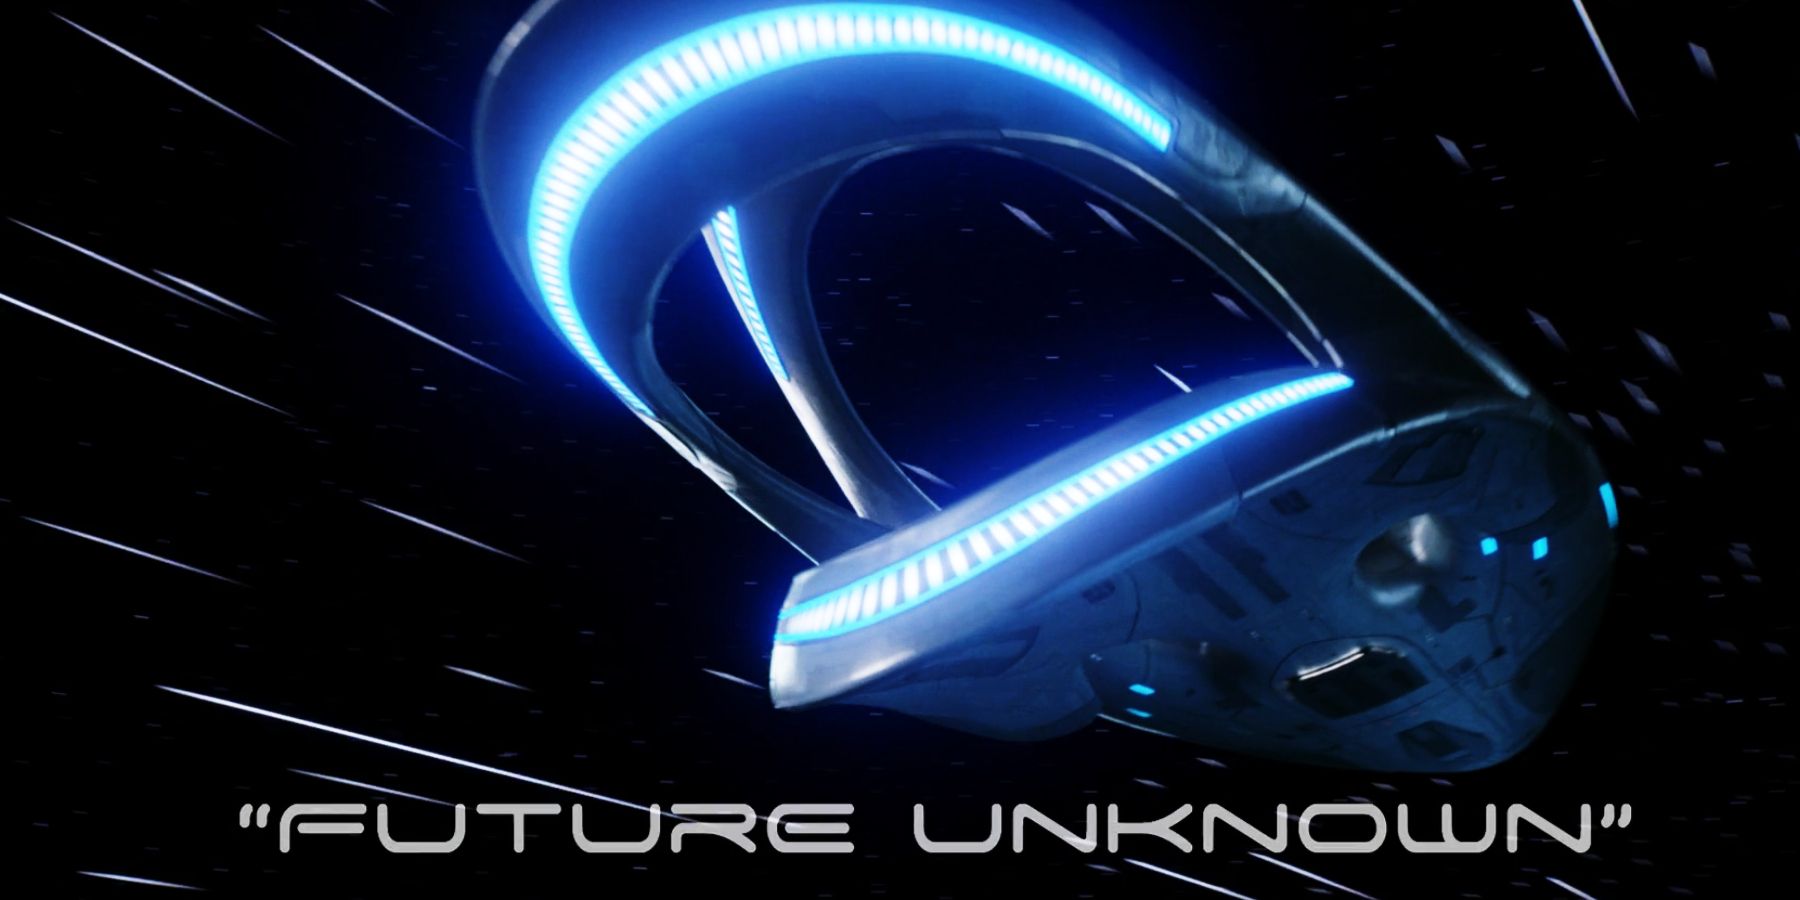 The Orville season 3, episode 10, Future Unknown title card